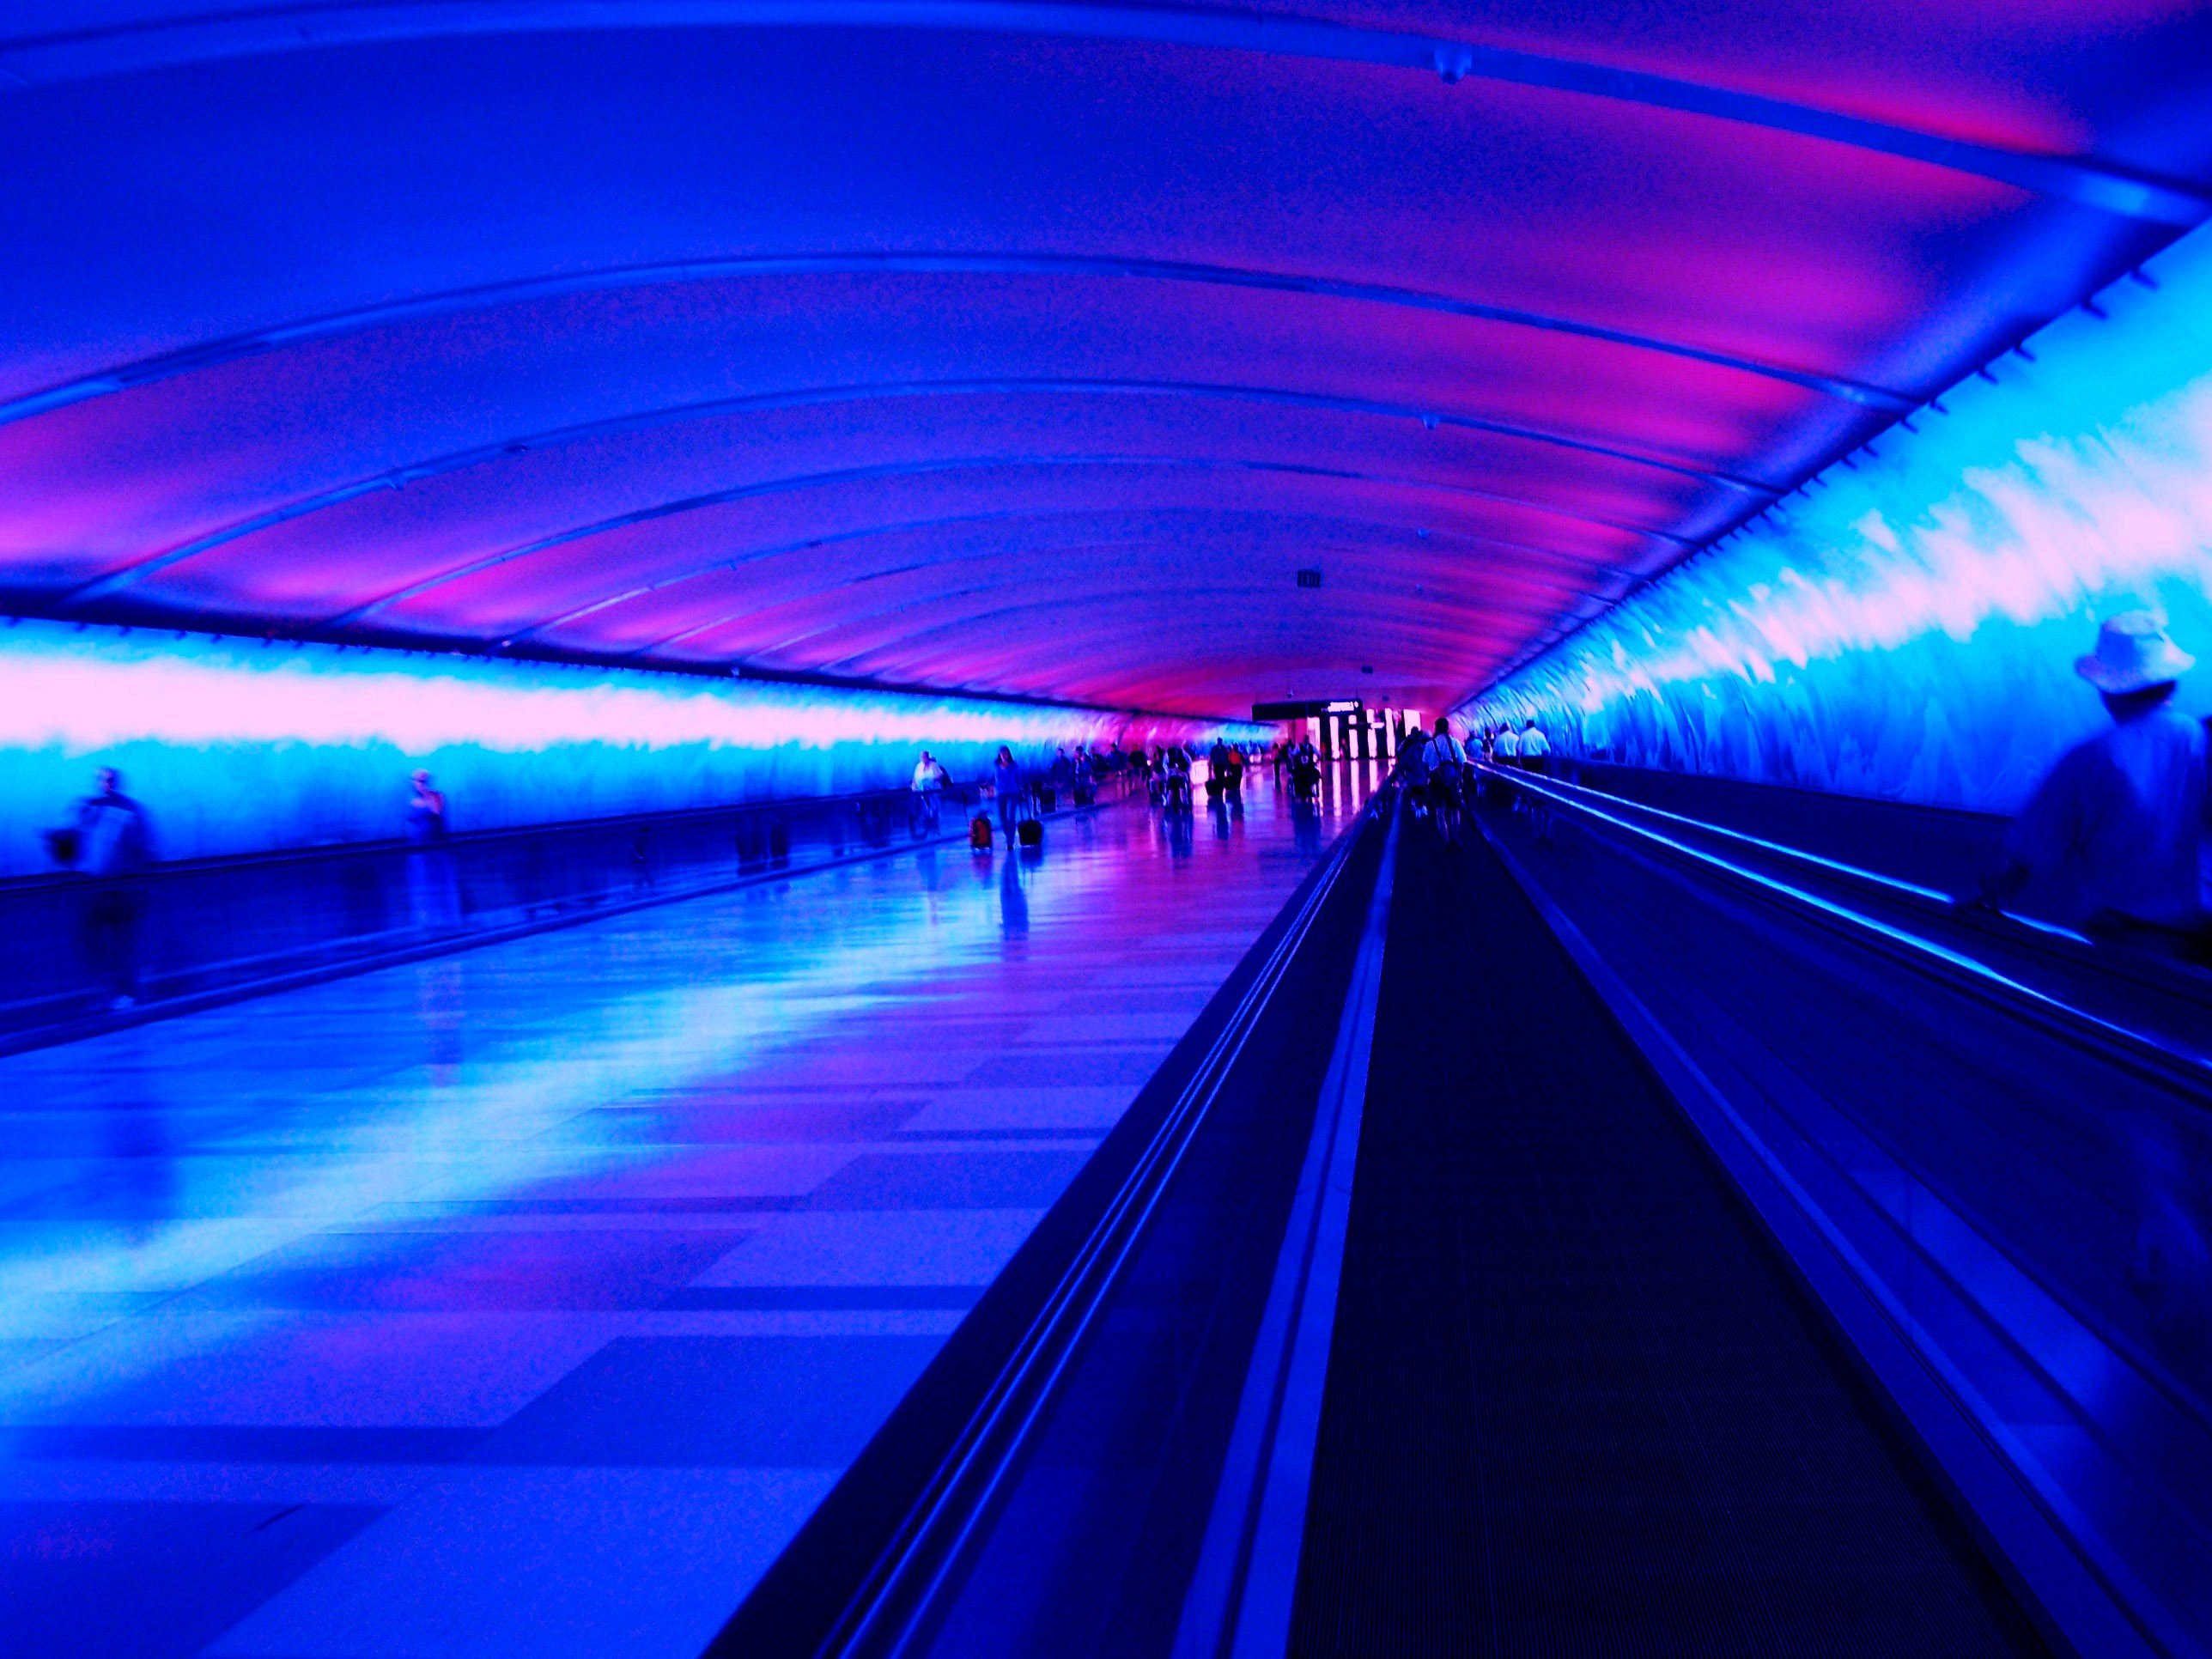 314126-airport-hallway-blue-photography.jpg